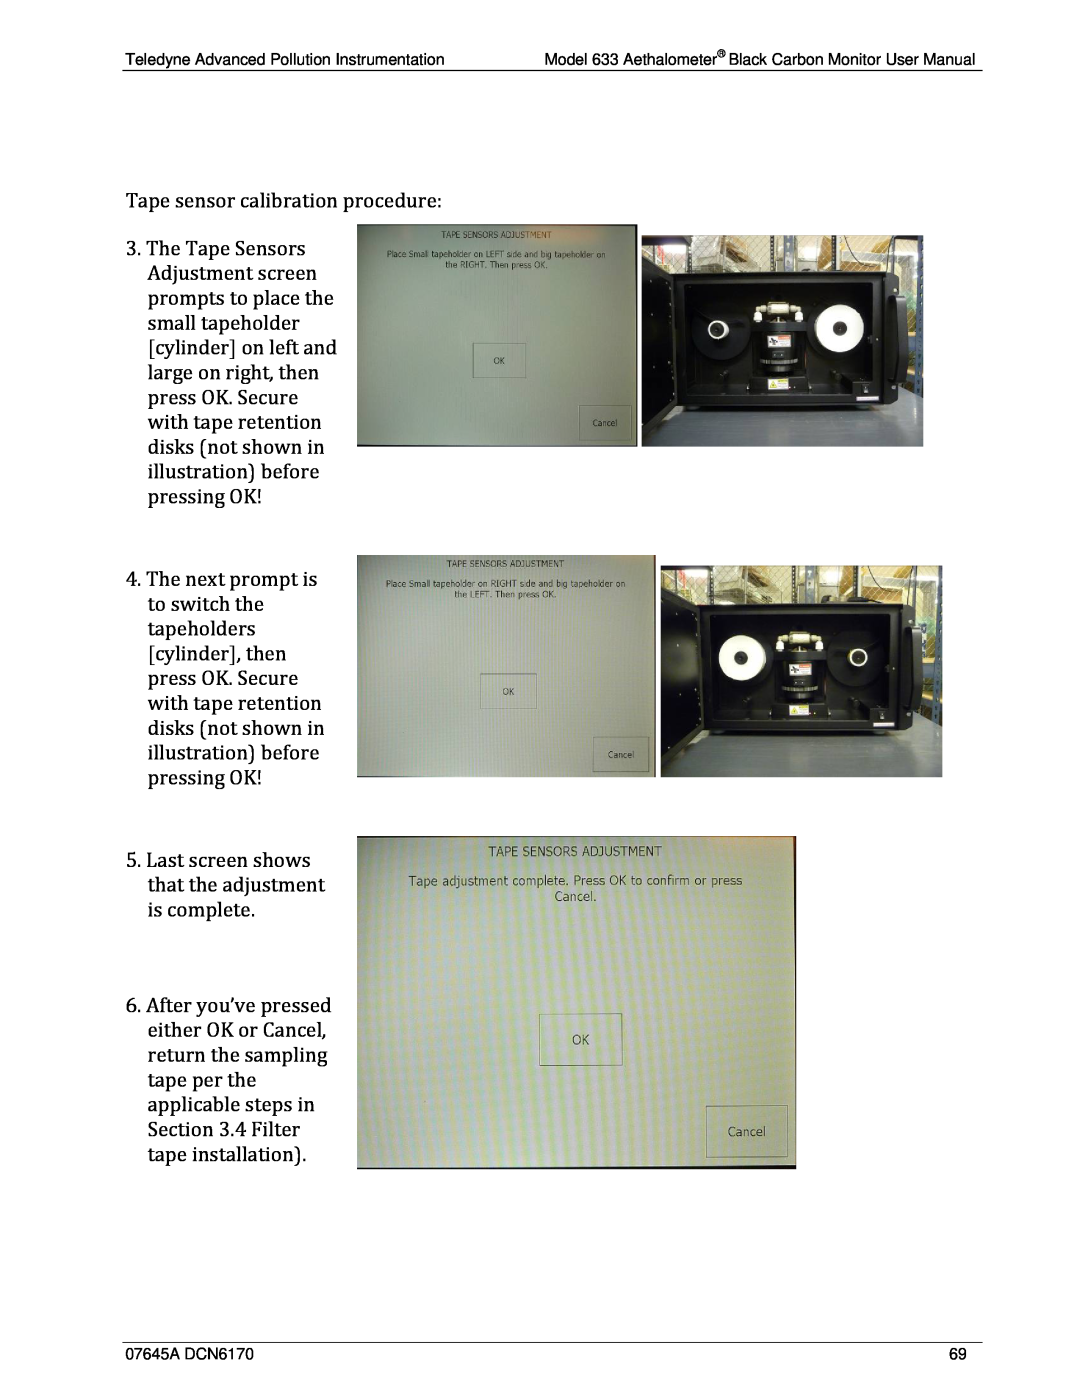 Teledyne 633 user manual Tape sensor calibration procedure 